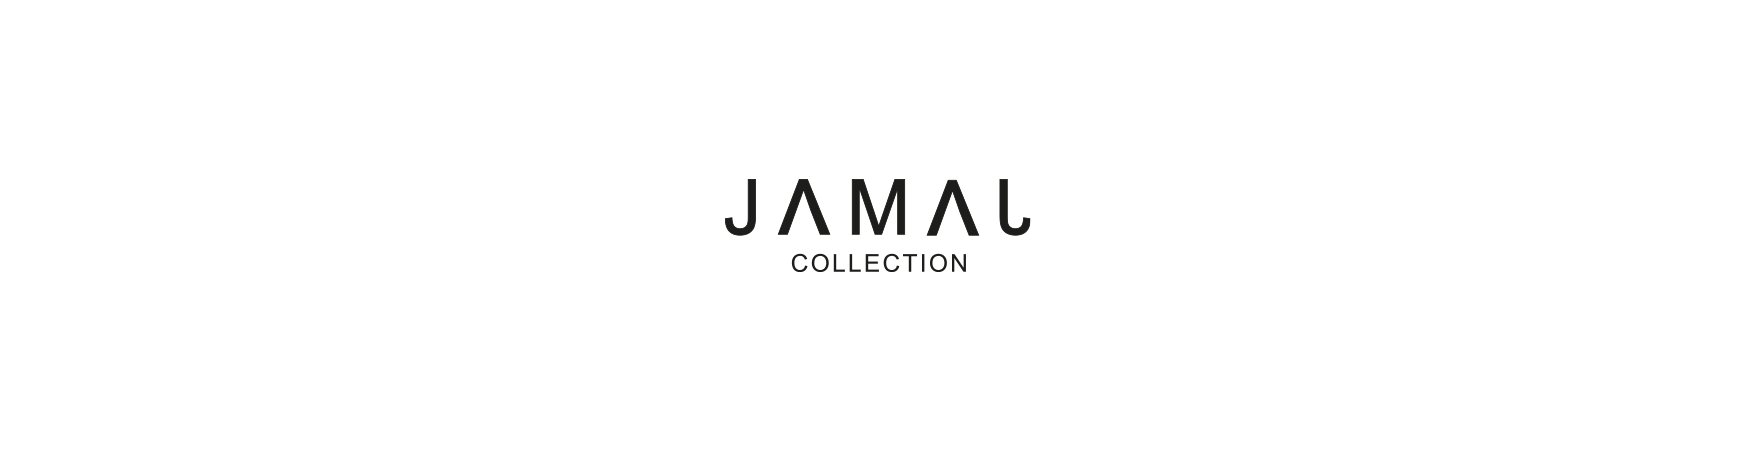 Jamal Collection